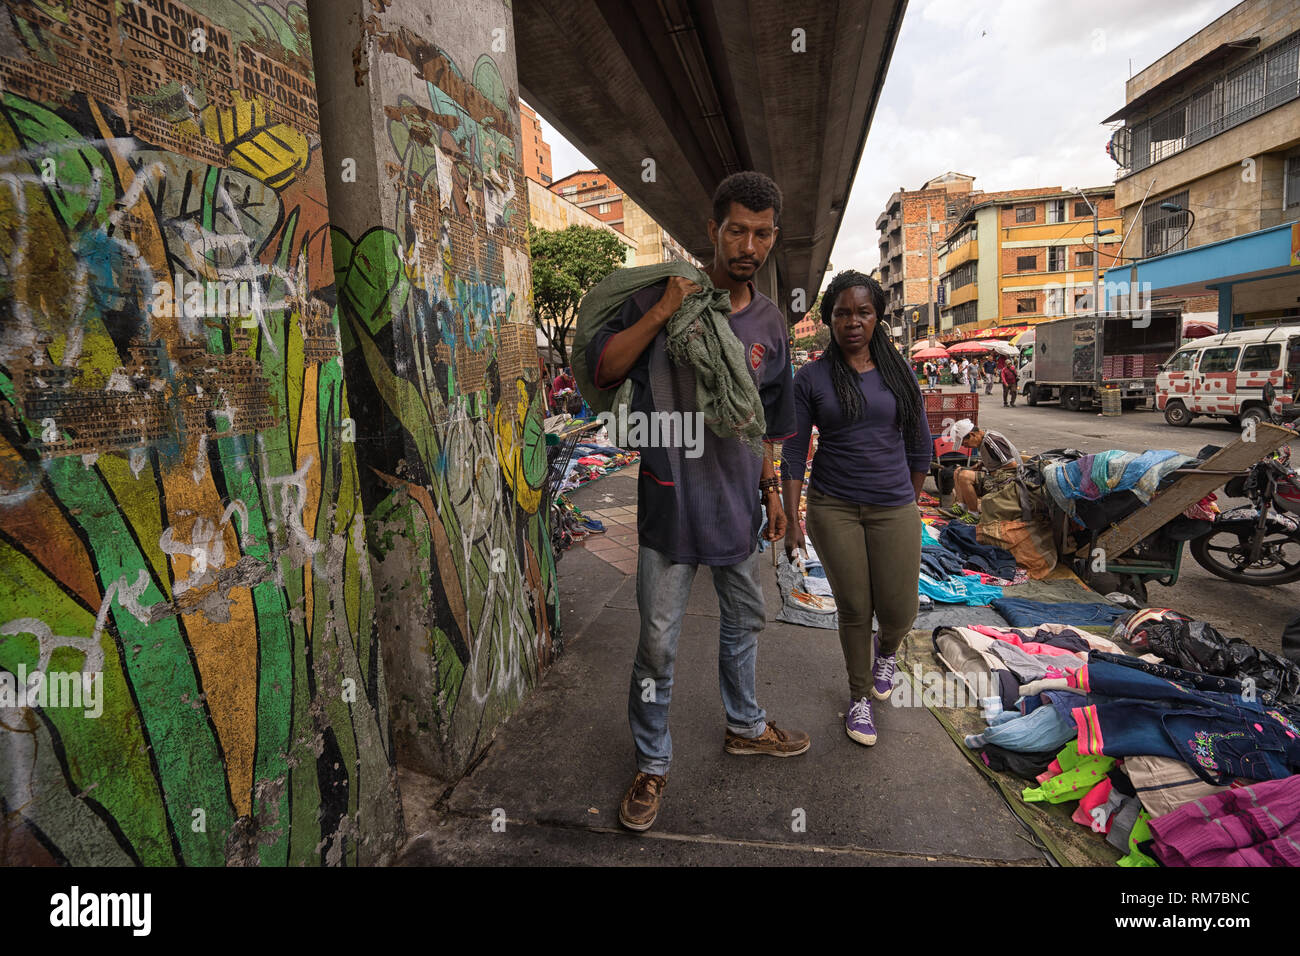 Medellin, Colombia - July 26, 2018: man and woman walking through the Prado flea market Stock Photo